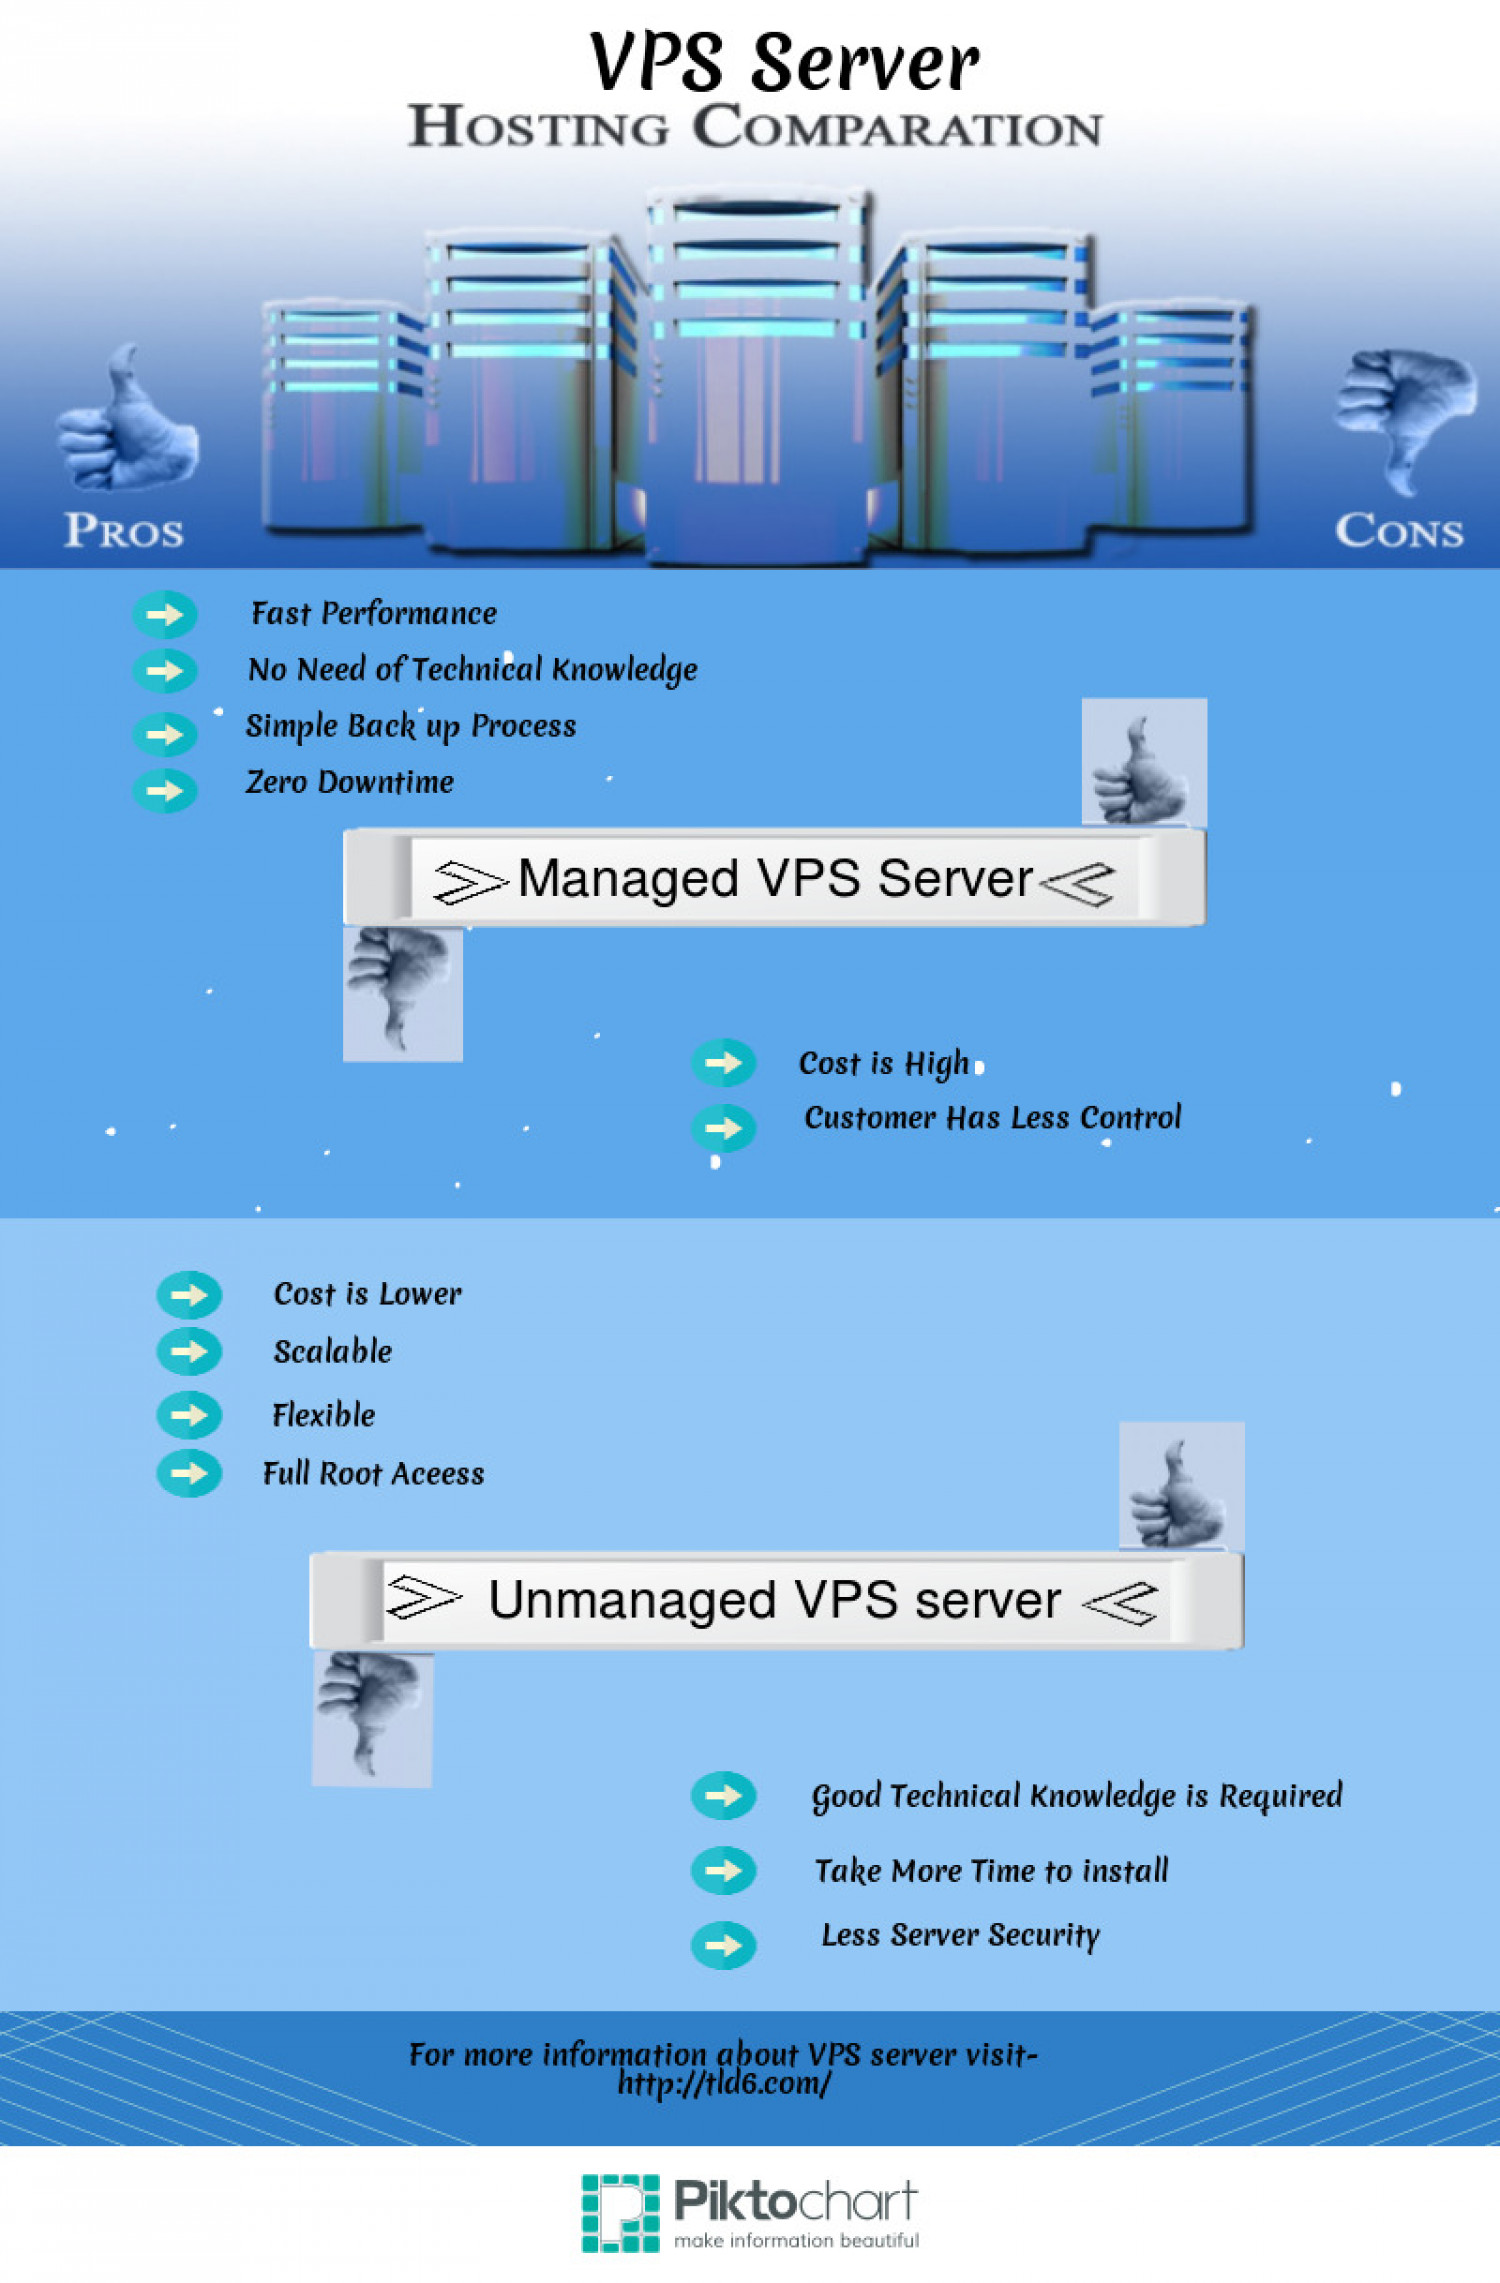 VPS Server Comparison Infographic